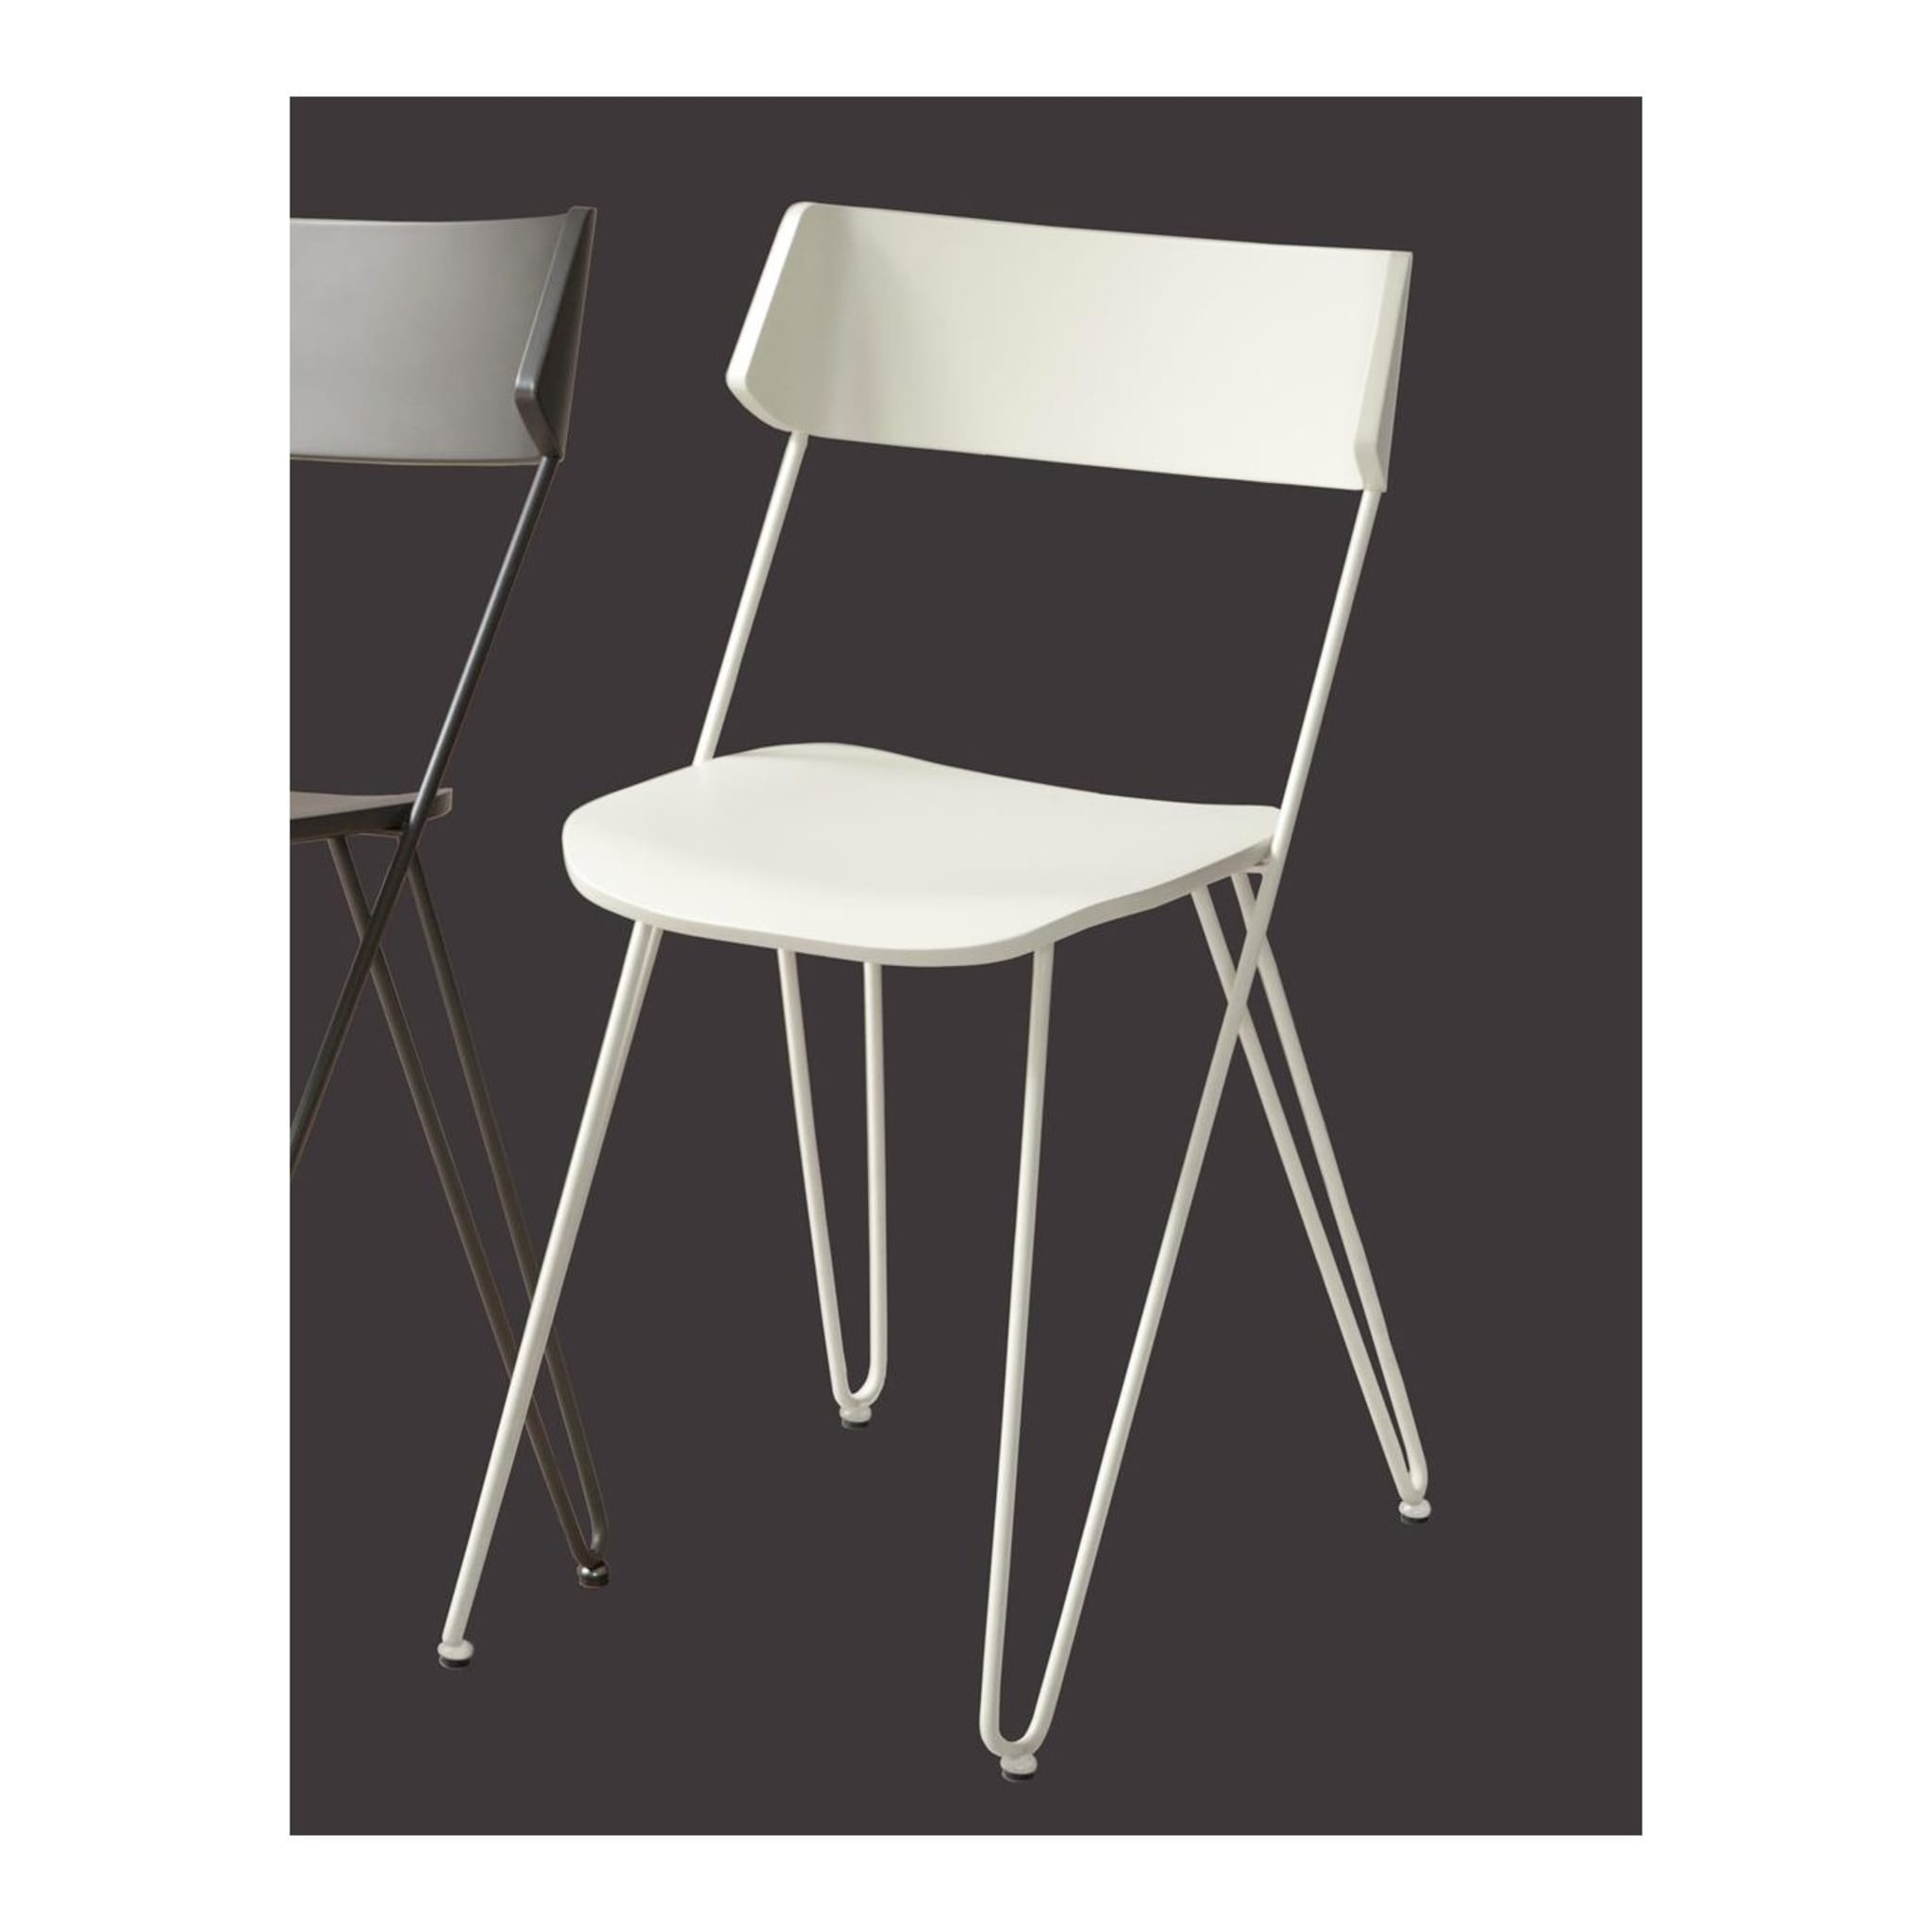 Ibsen One White Chair - Alternative view 1